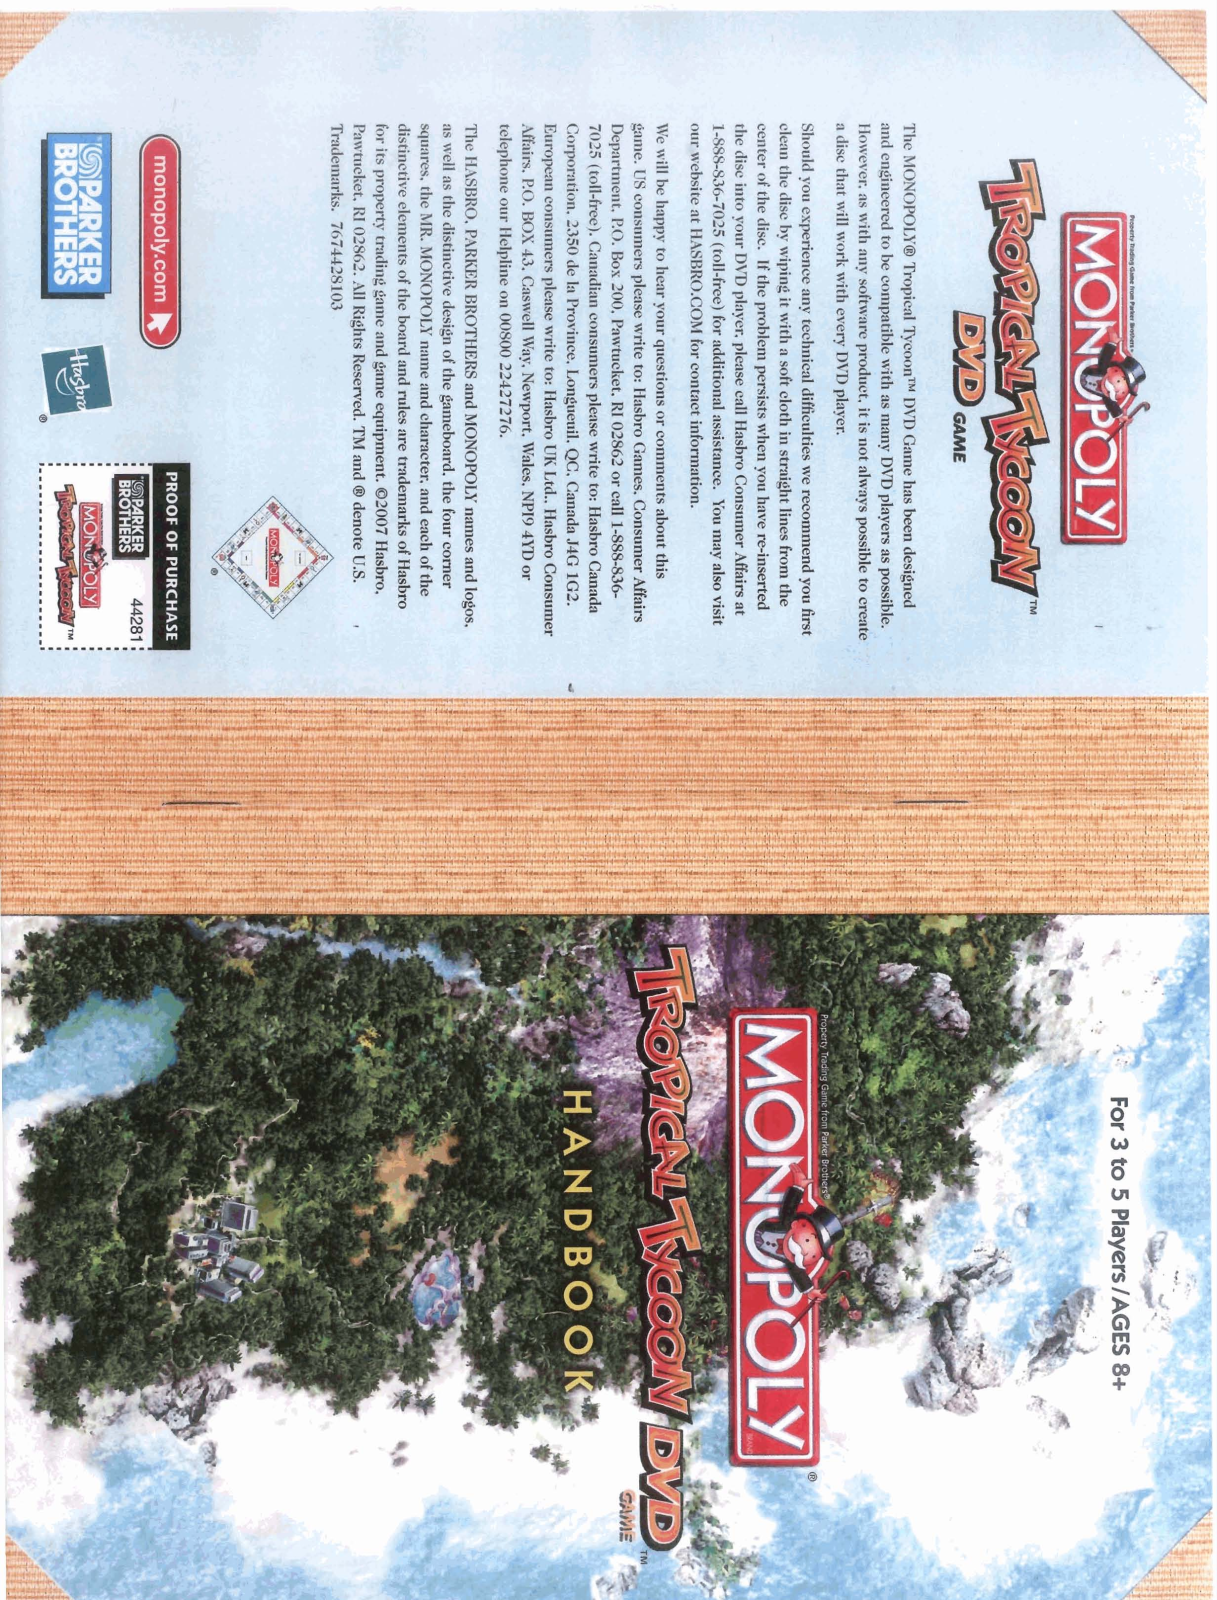 HASBRO Monopoly Tropical Tycoon DVD Game User Manual